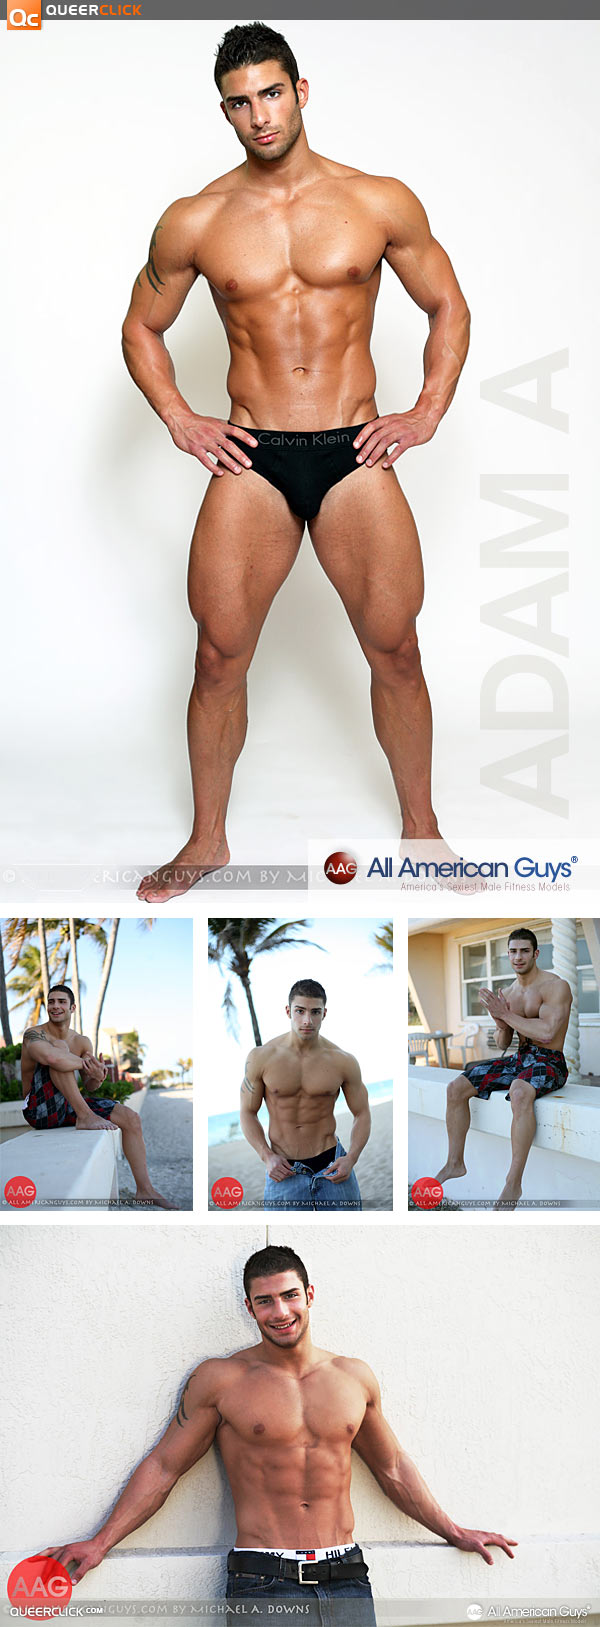 All American Guys: Adam A.